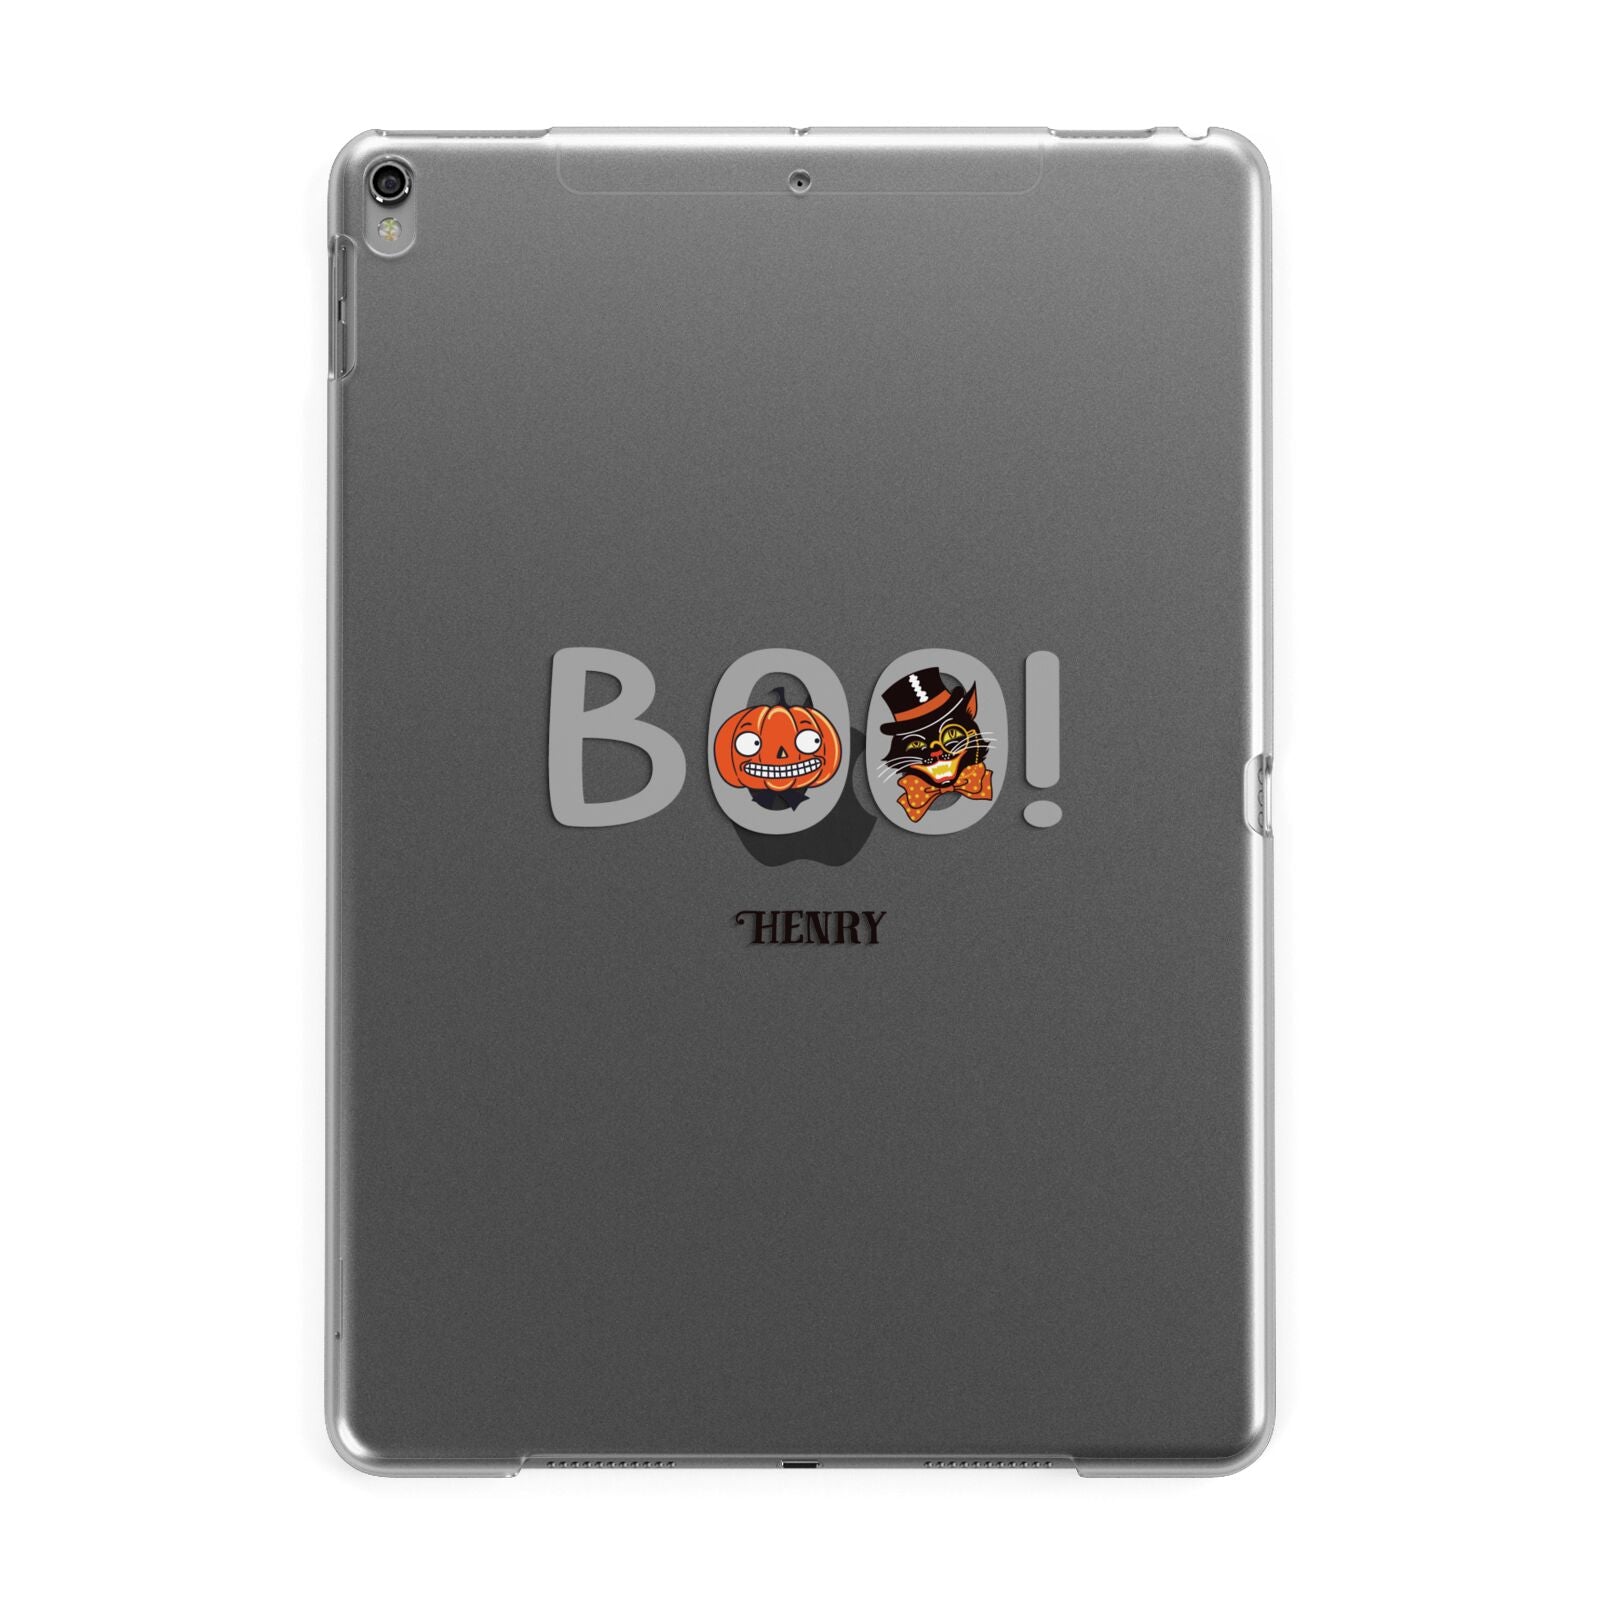 Boo Personalised Apple iPad Grey Case